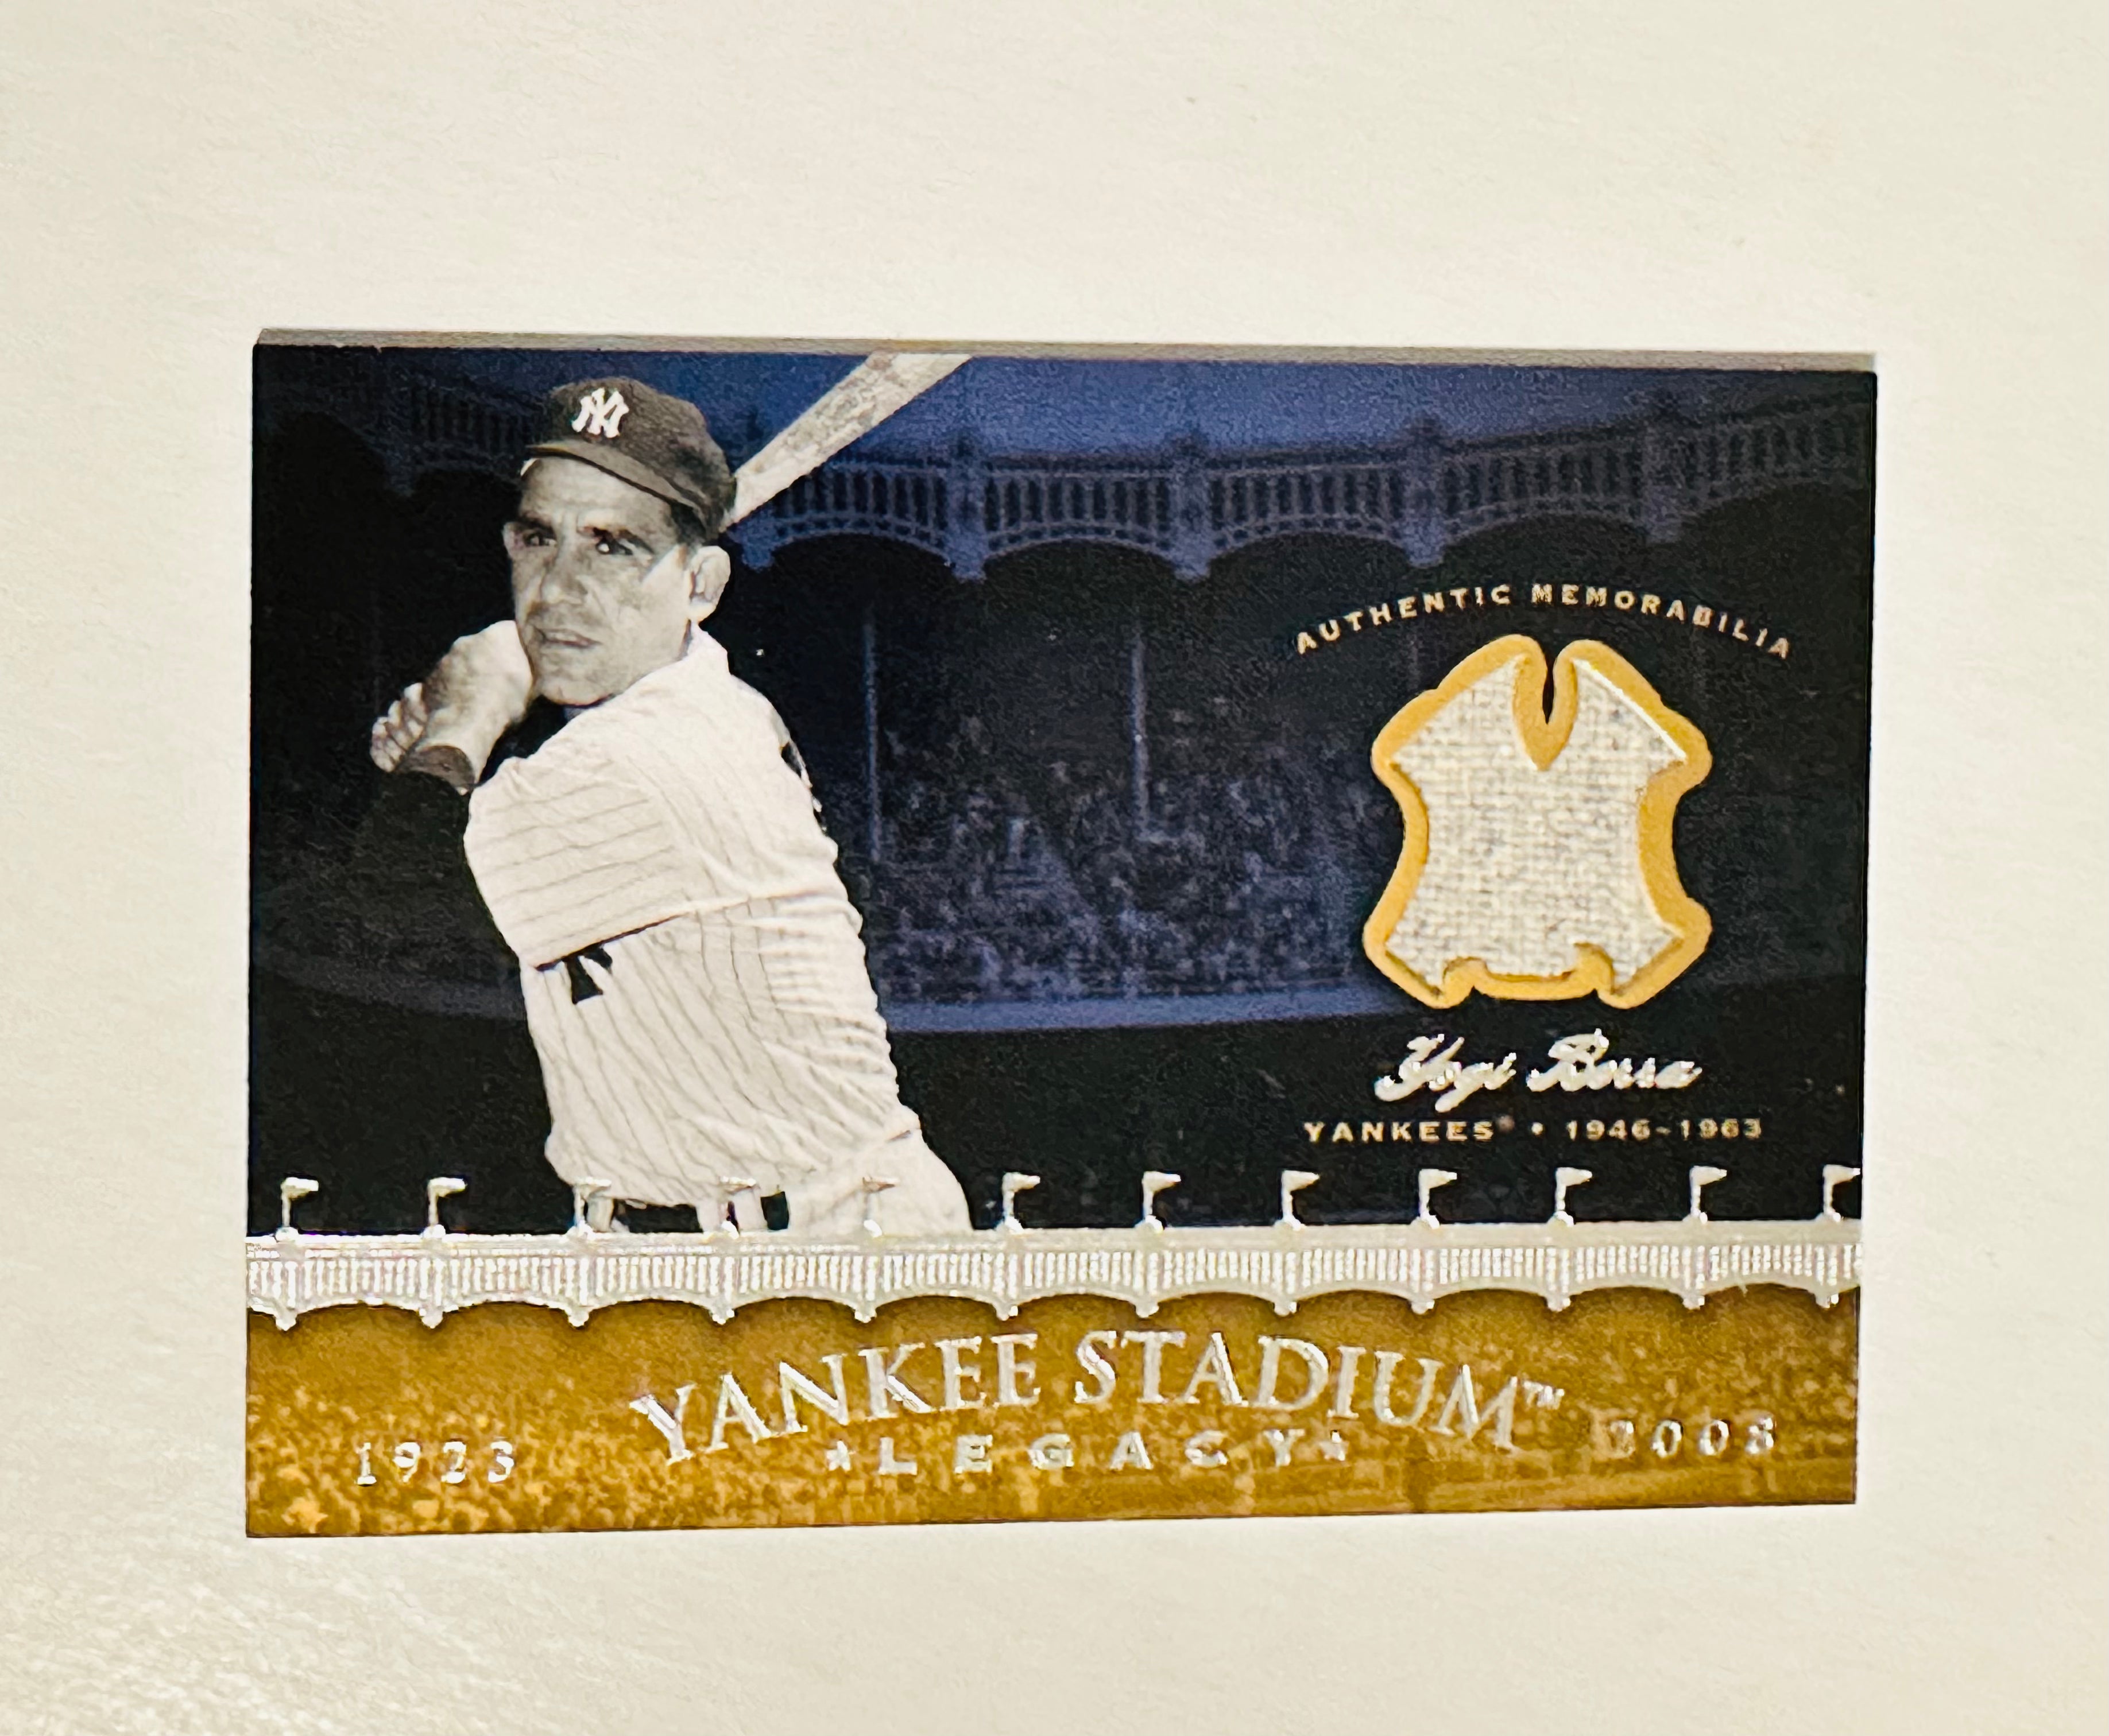 Yankees yogi, Berra baseball legends memorabilia, Insert card